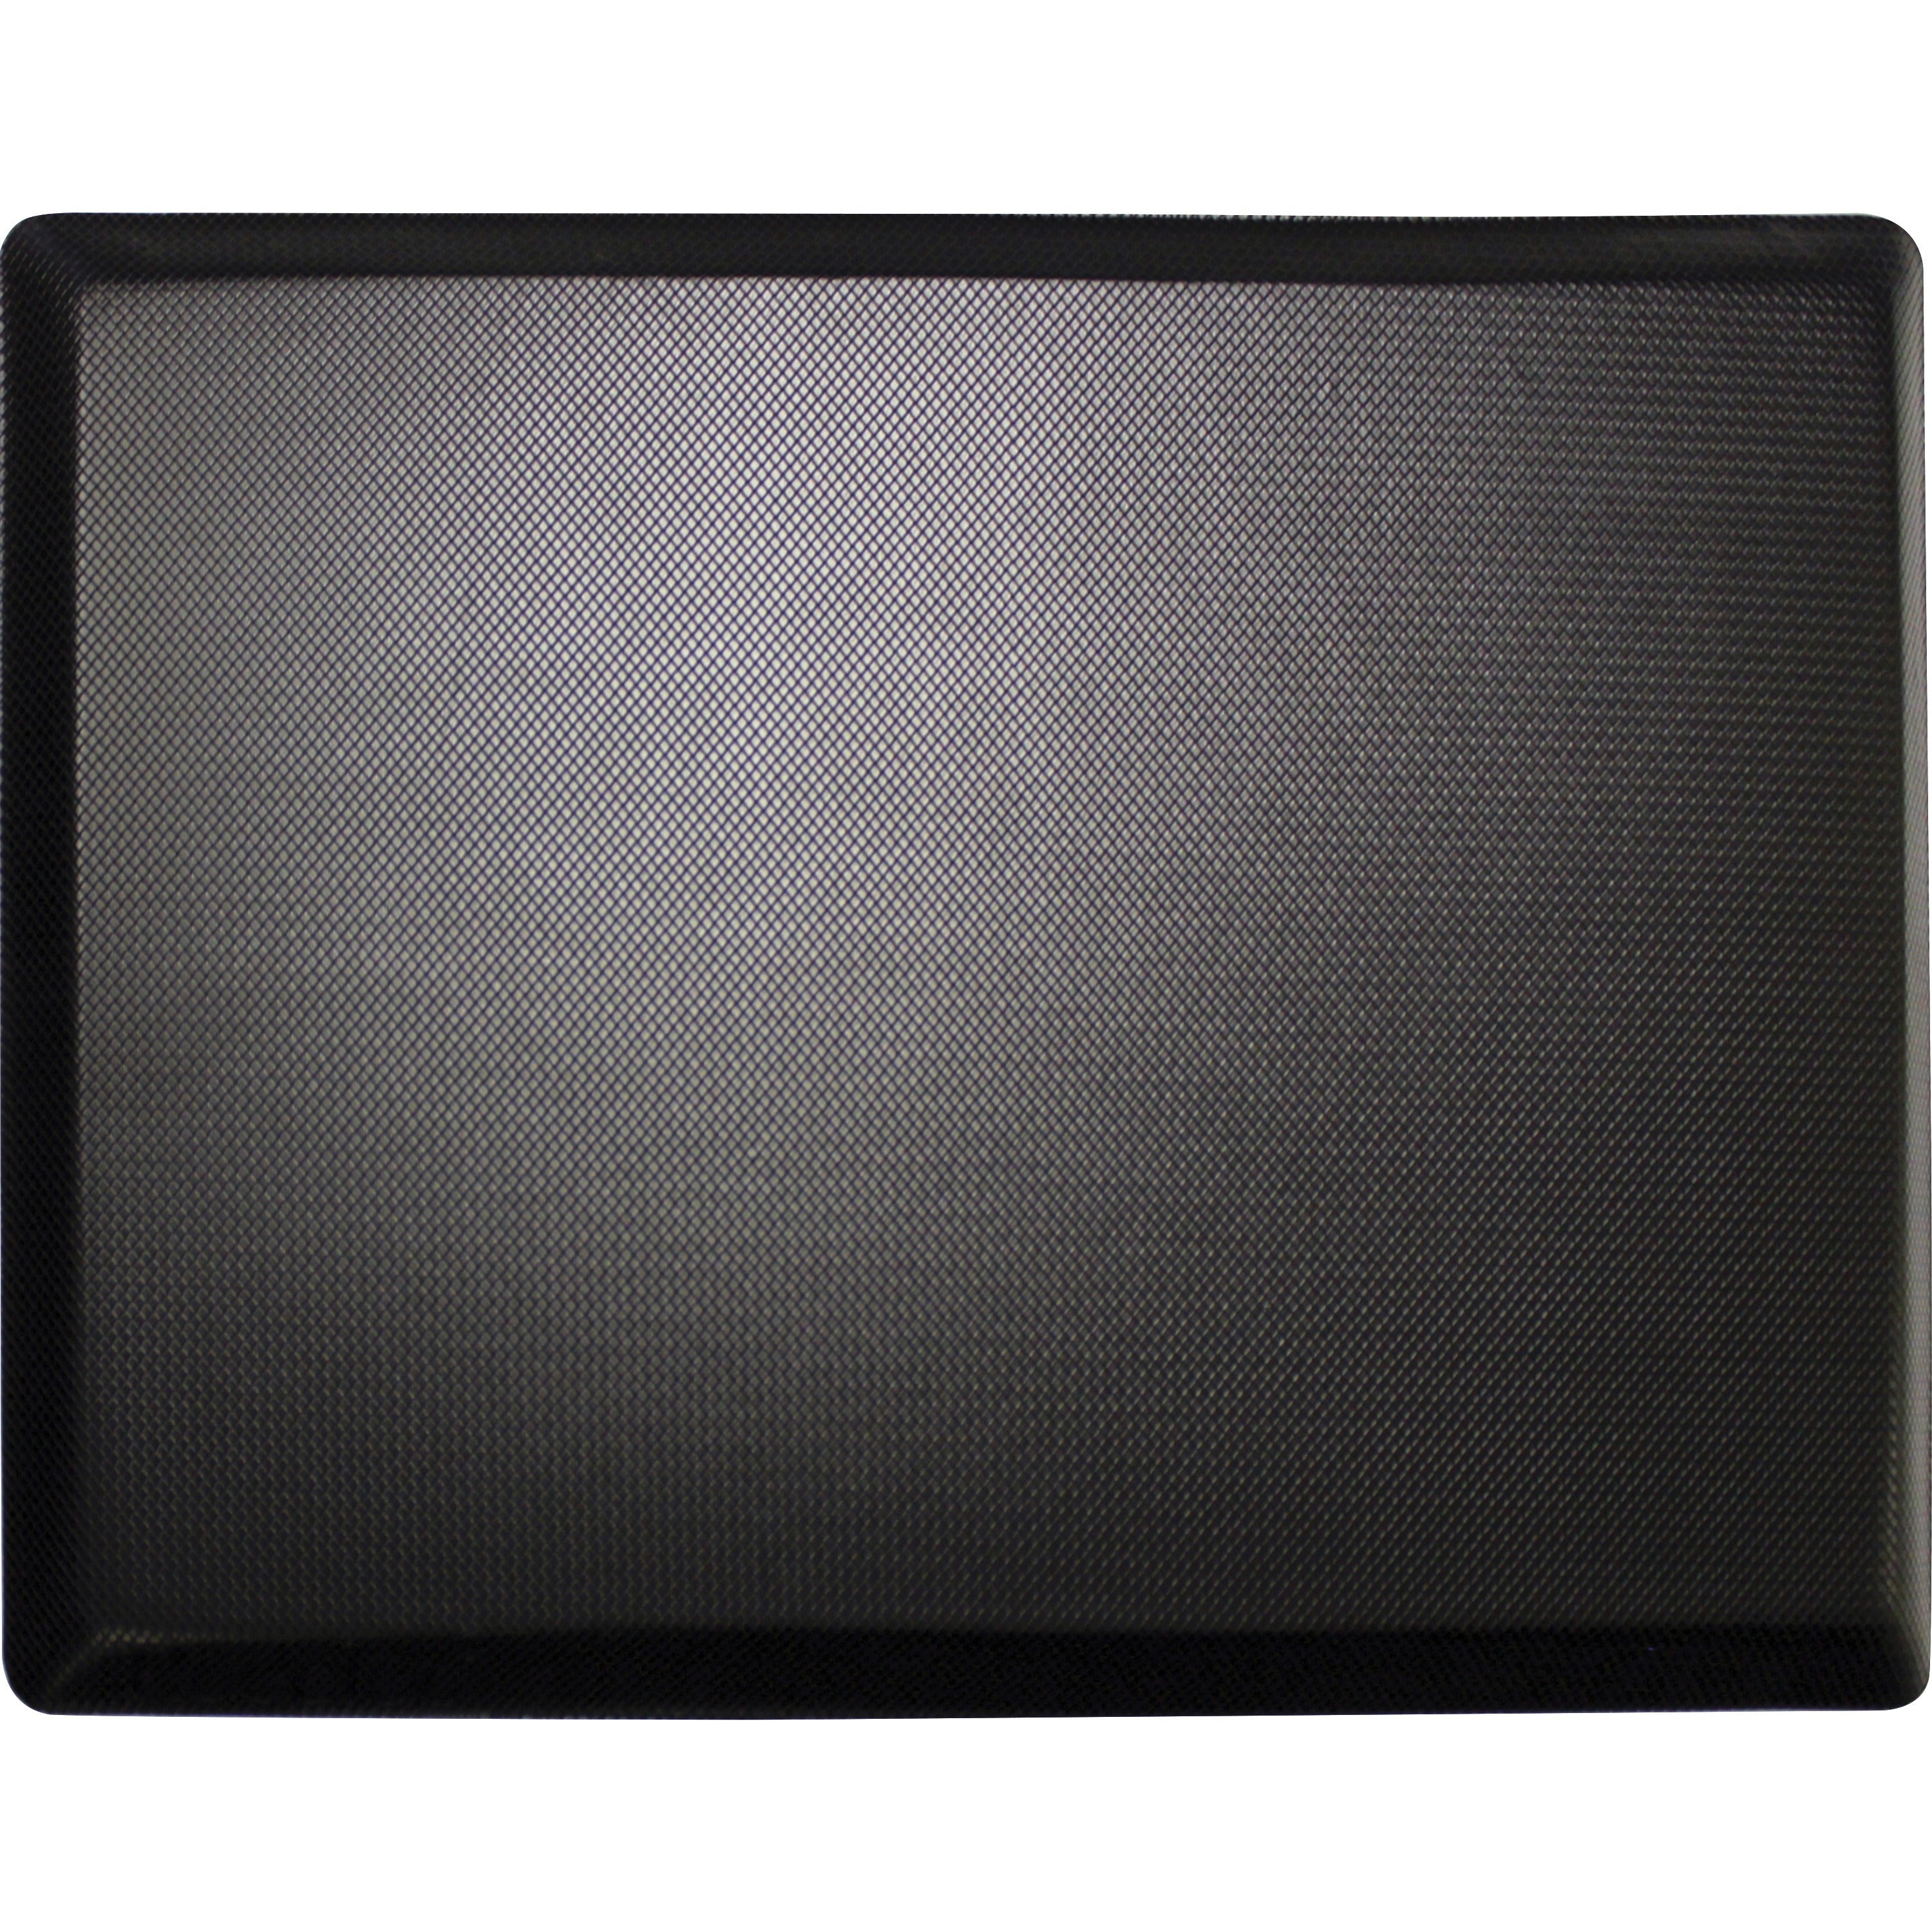 lorell-energizing-sit-stand-mat-desk-protection-20-length-x-30-width-x-0750-thickness-rectangular-memory-foam-black-1each_llr99985 - 1